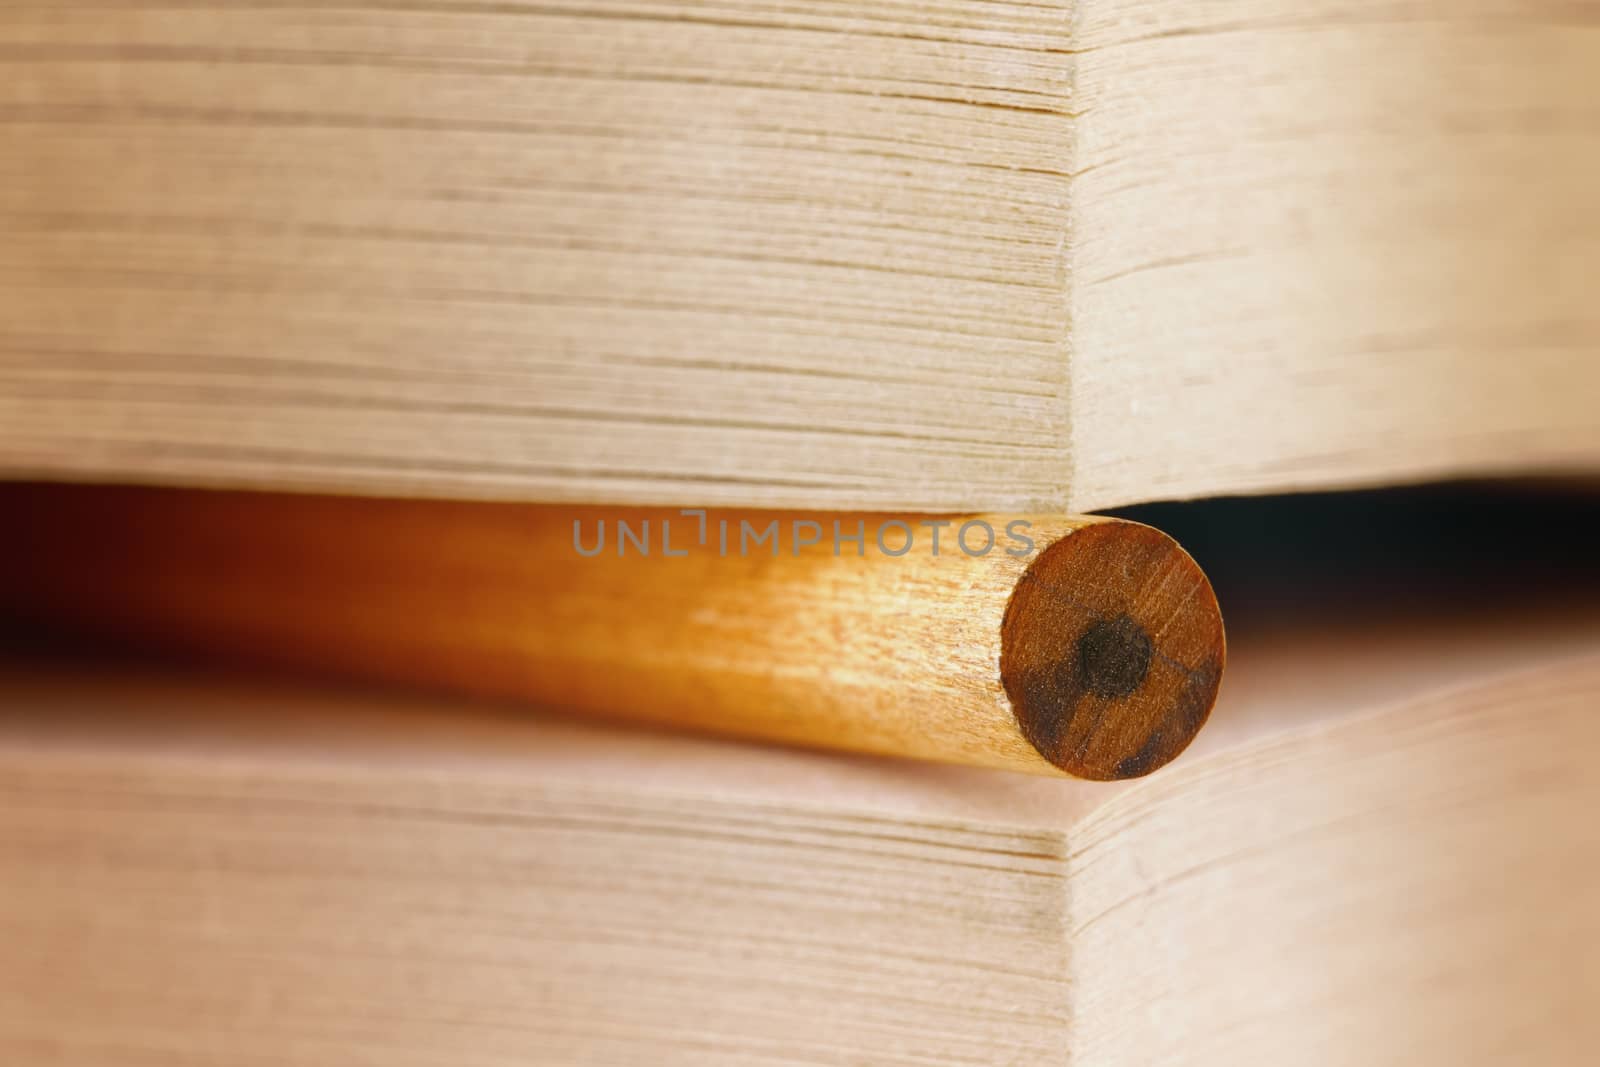 a pencil inserted in a book